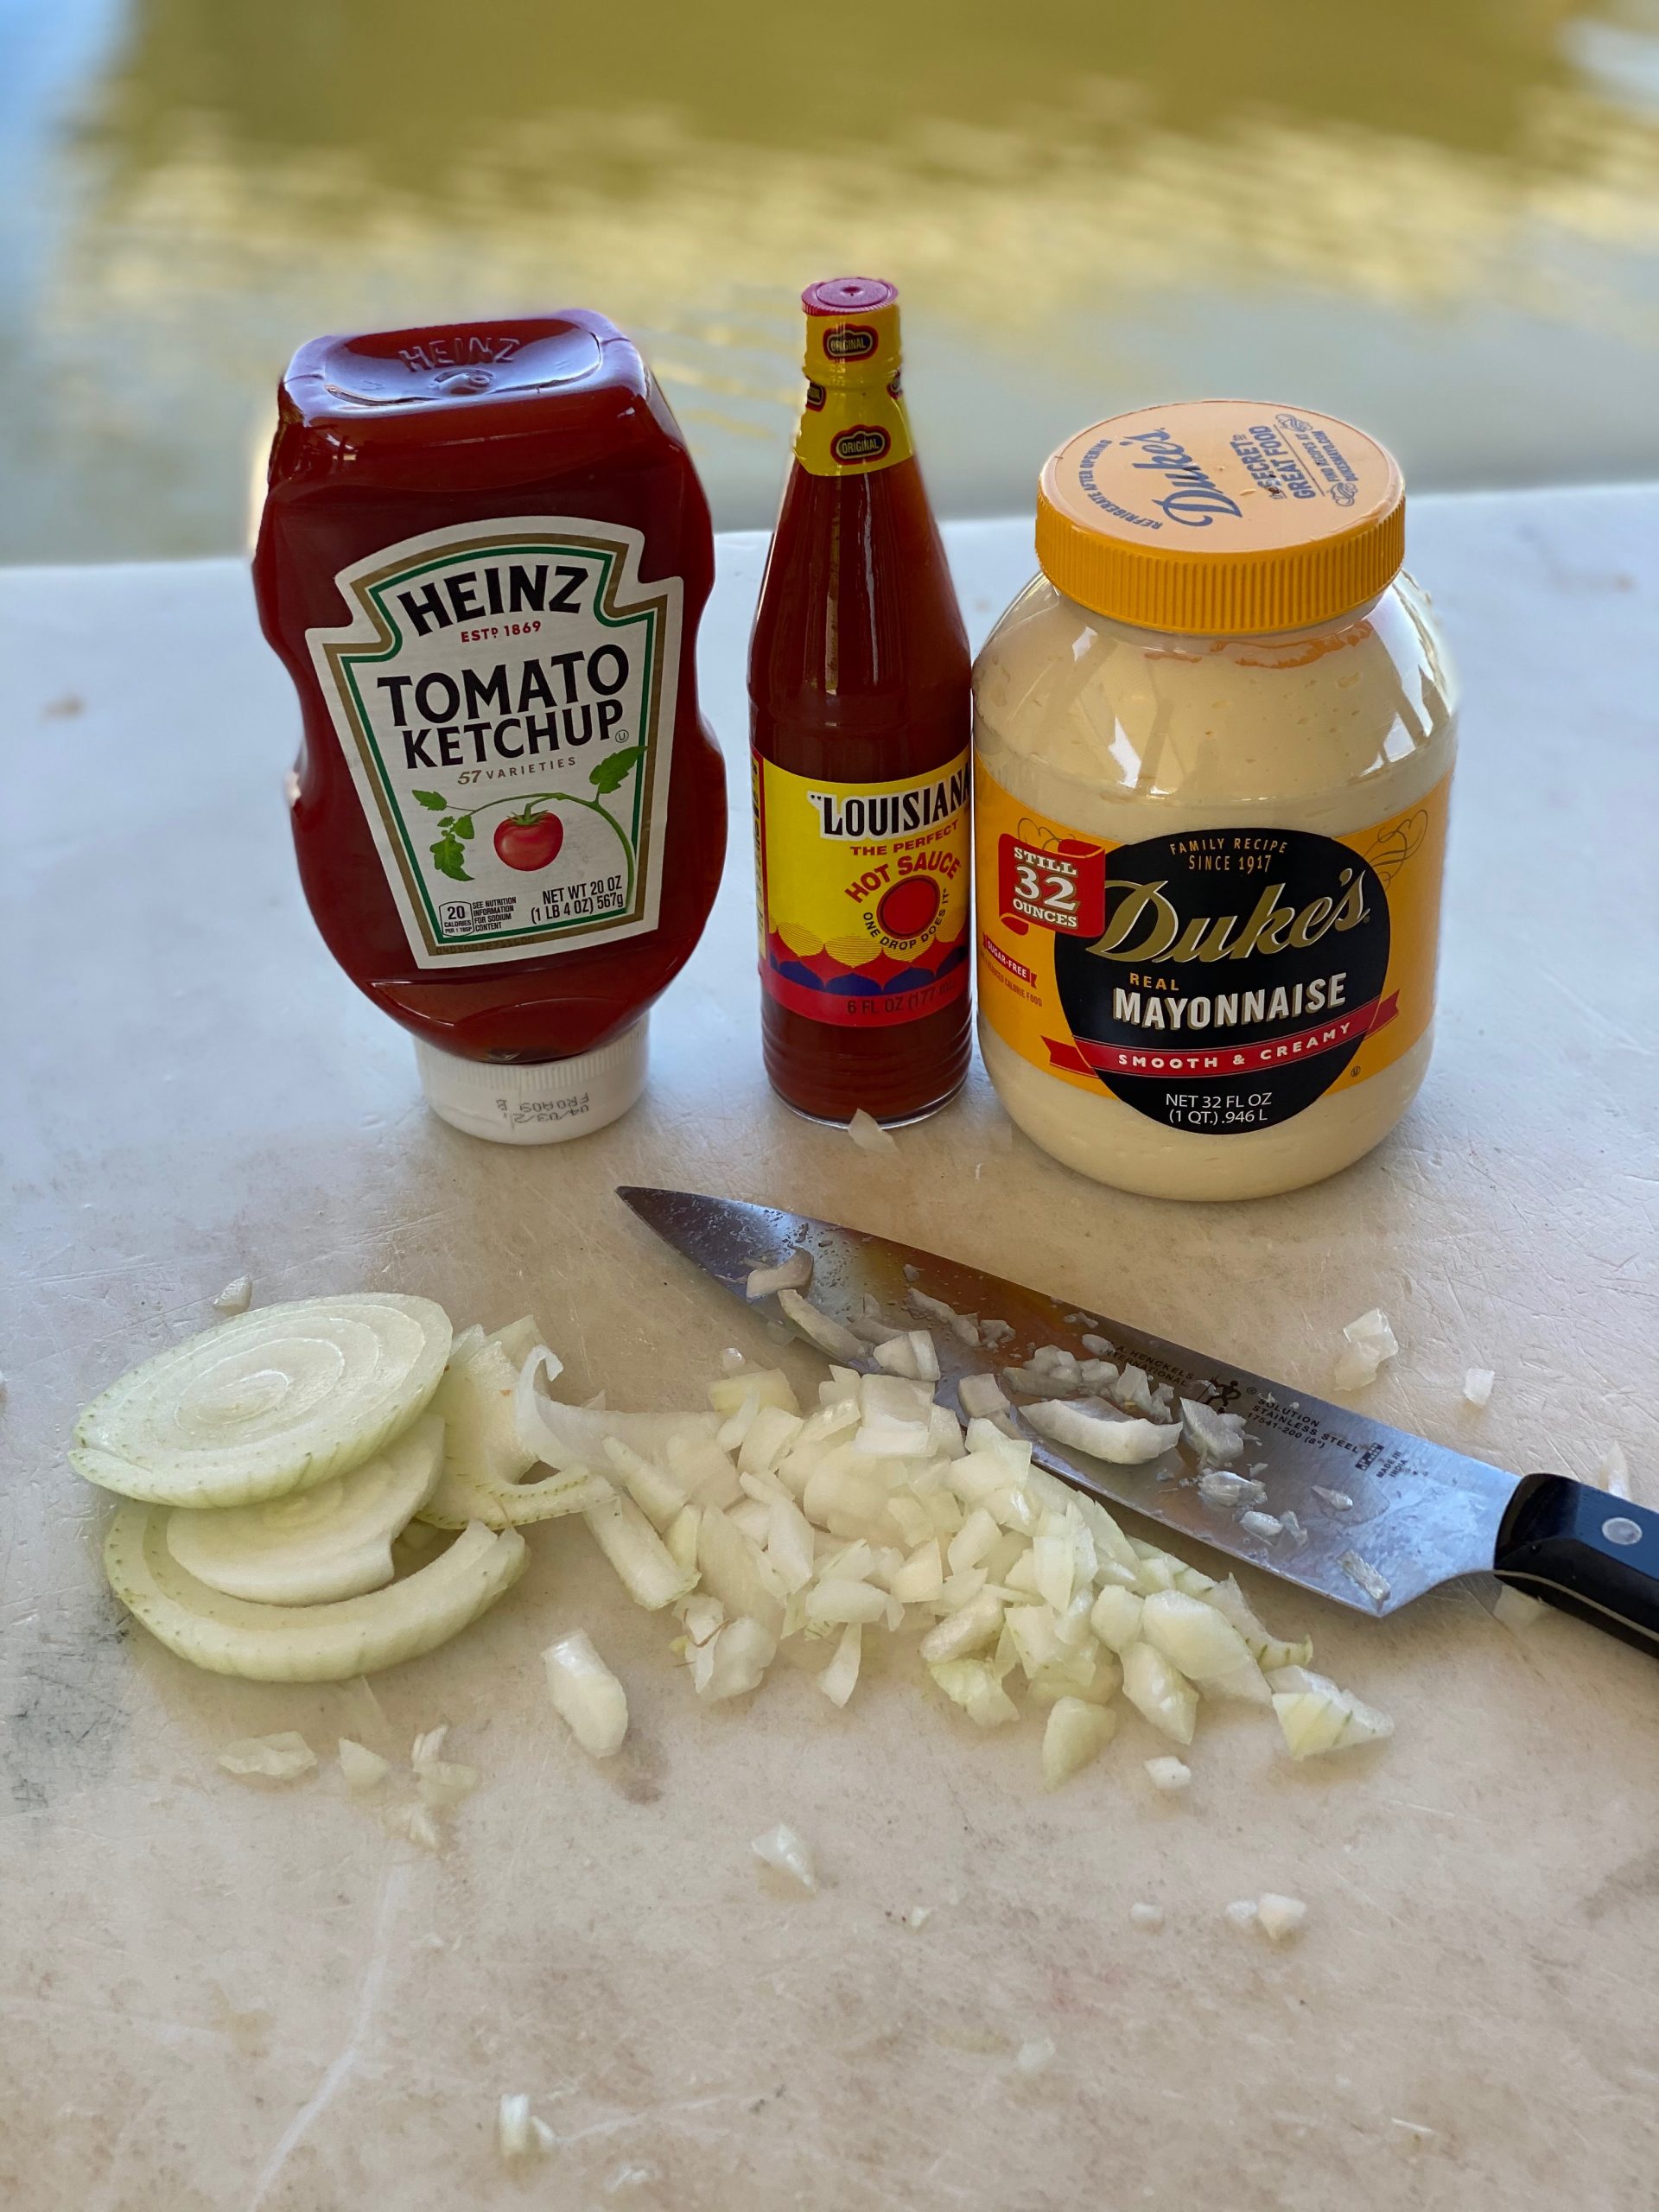 Louisiana® The Perfect Hot Sauce, 6 fl oz - Kroger